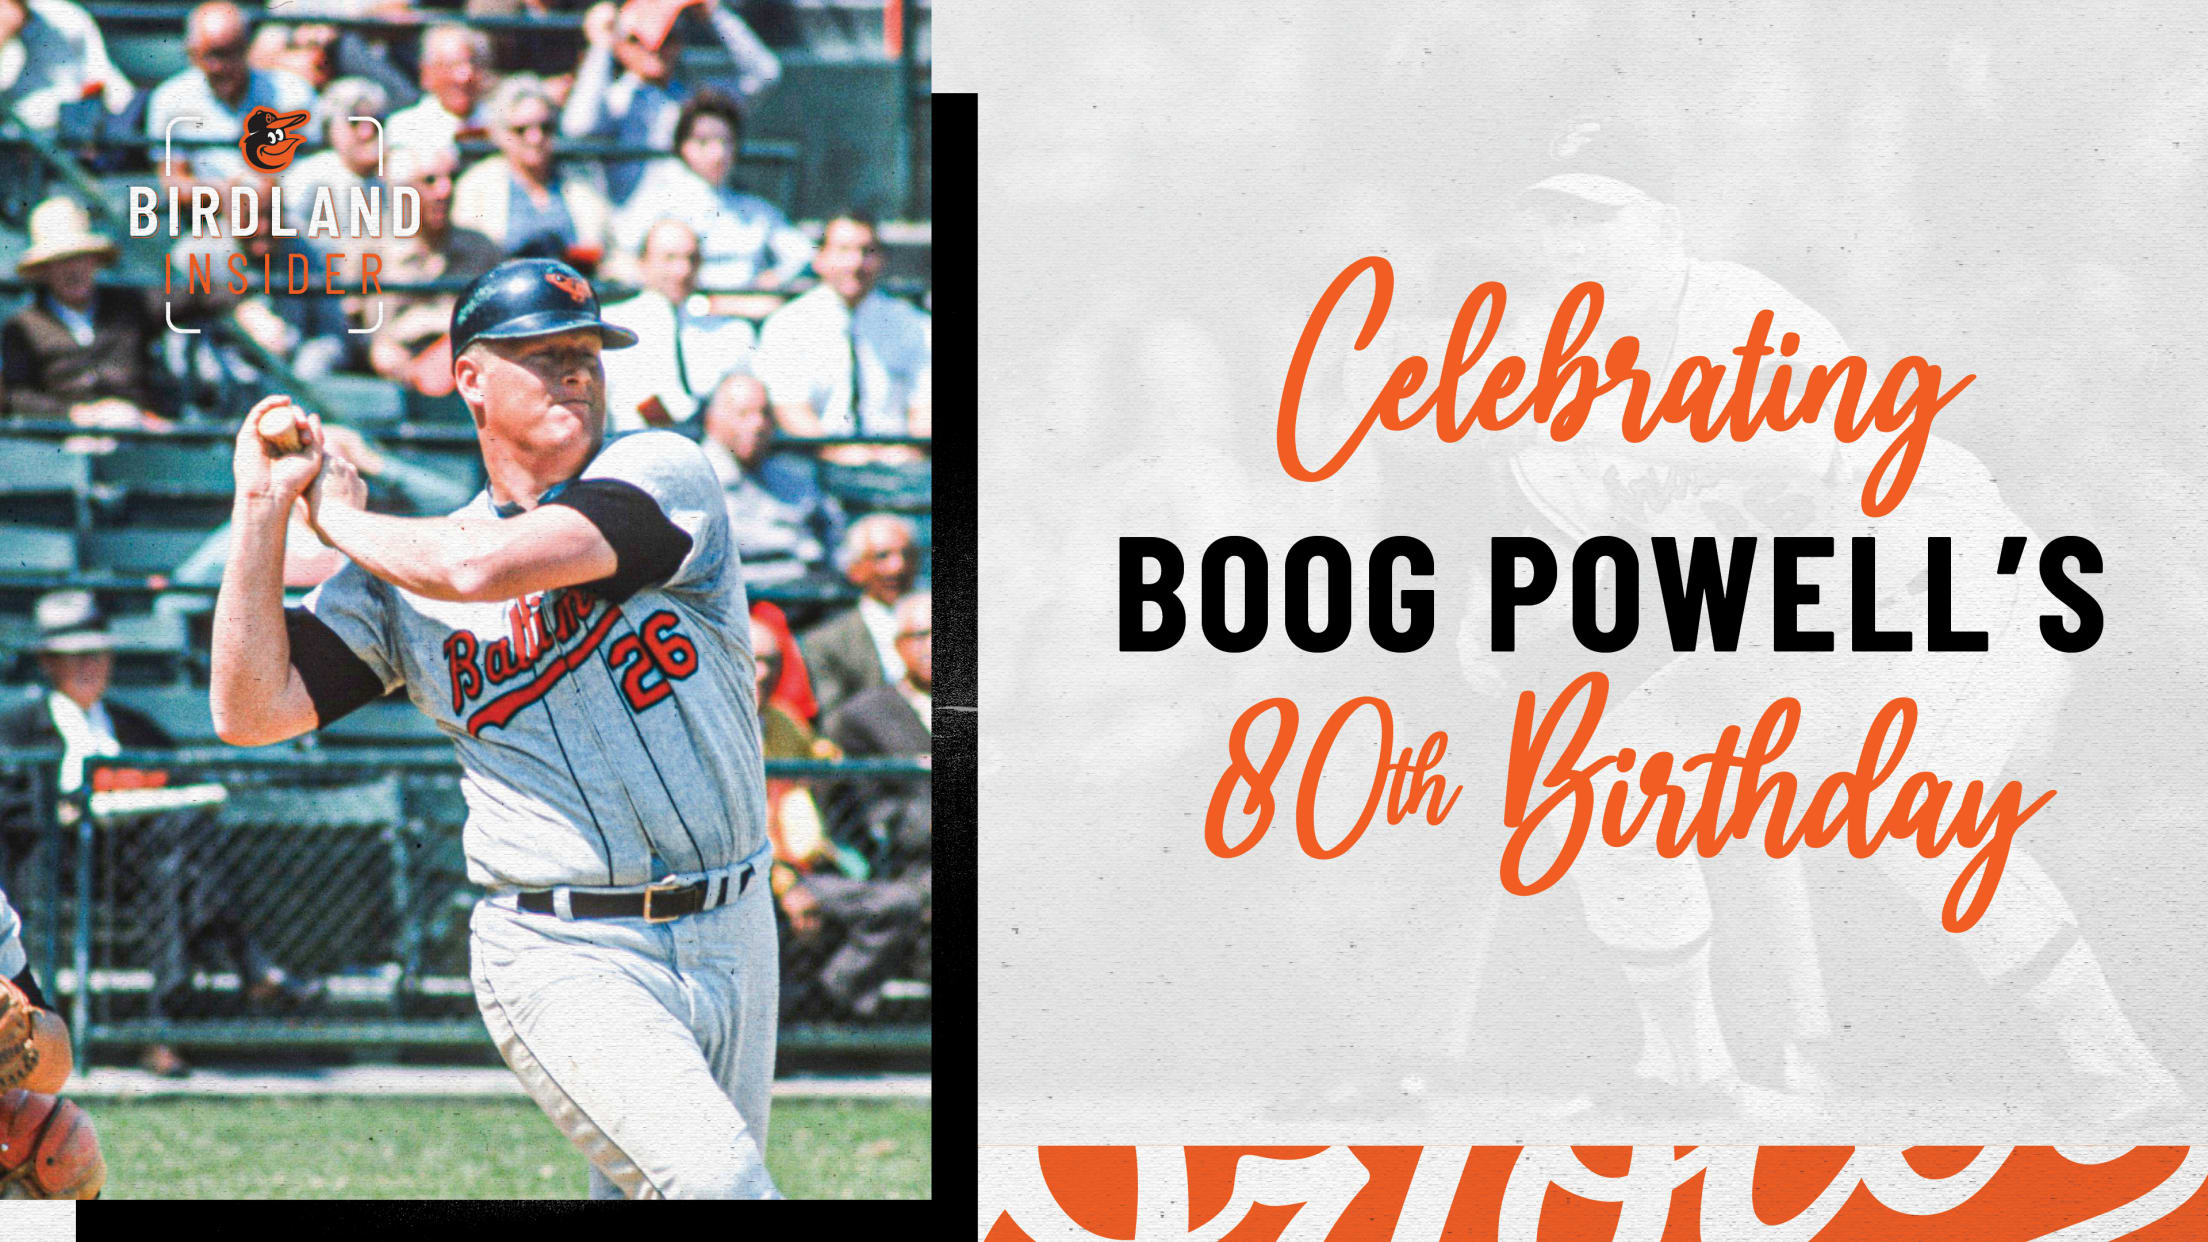 bal_celebrating-boog-powells-80th-birthday-header